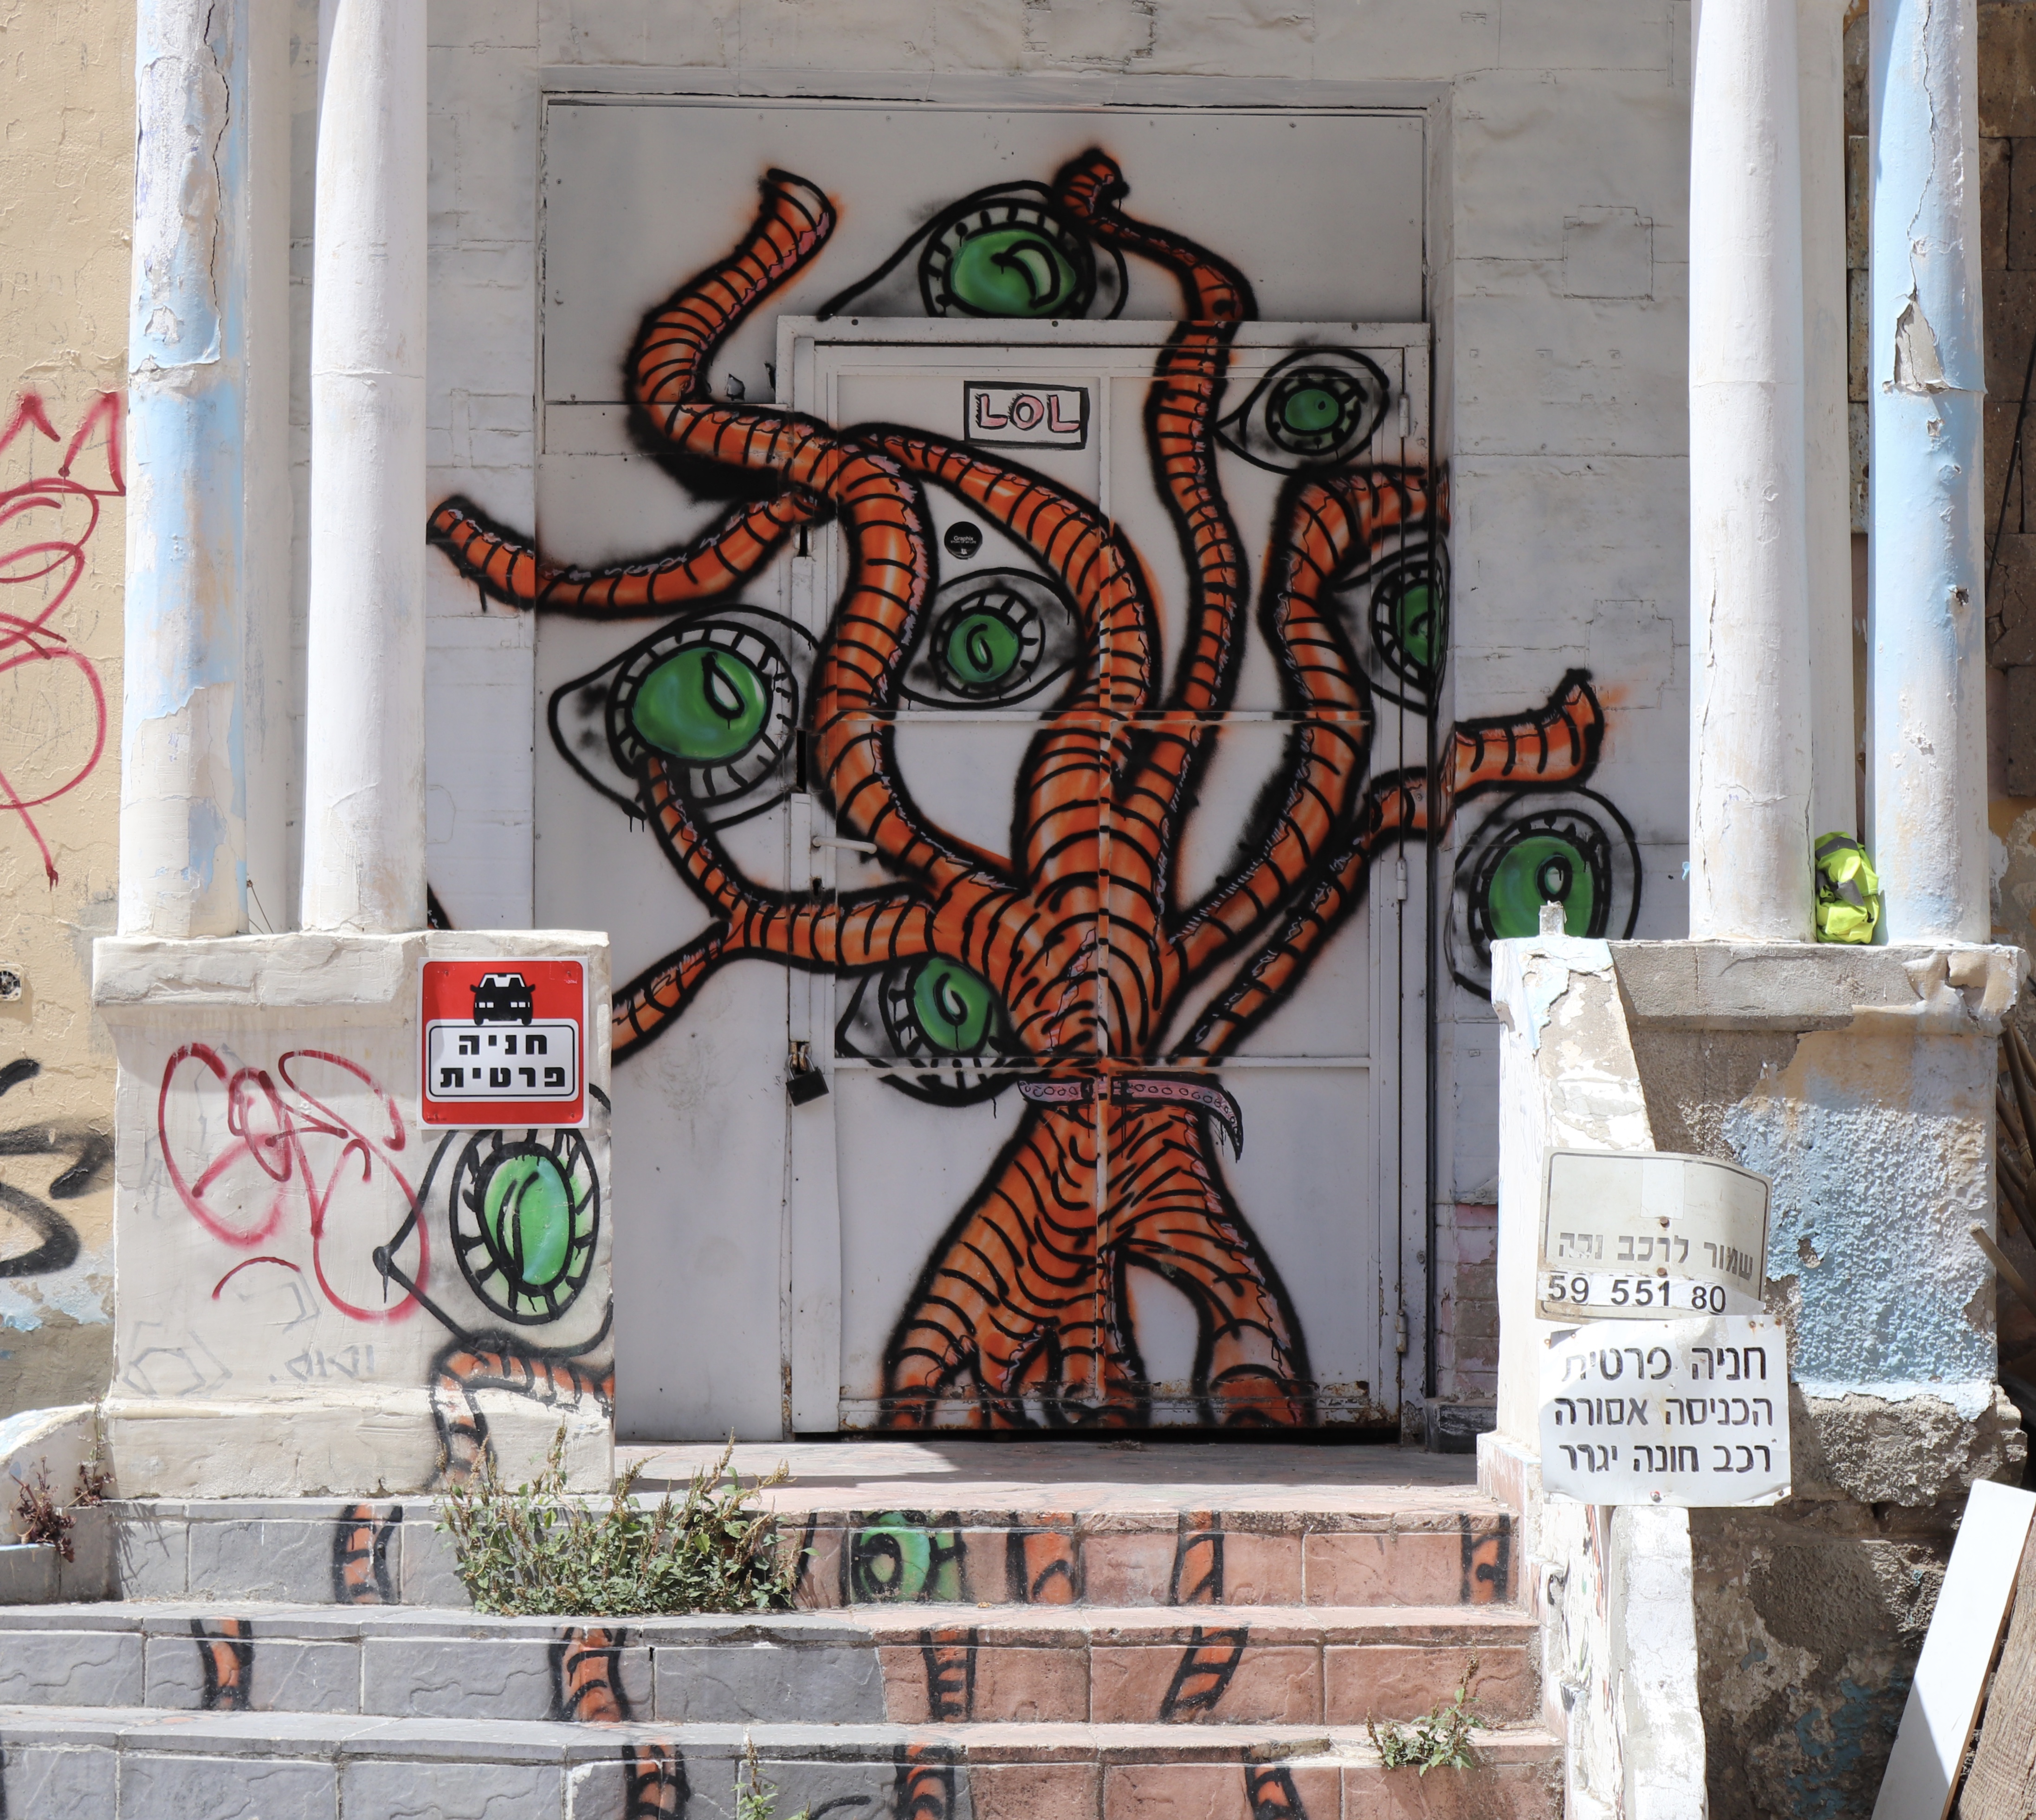 Octopus graffiti in the Yemenite quarter